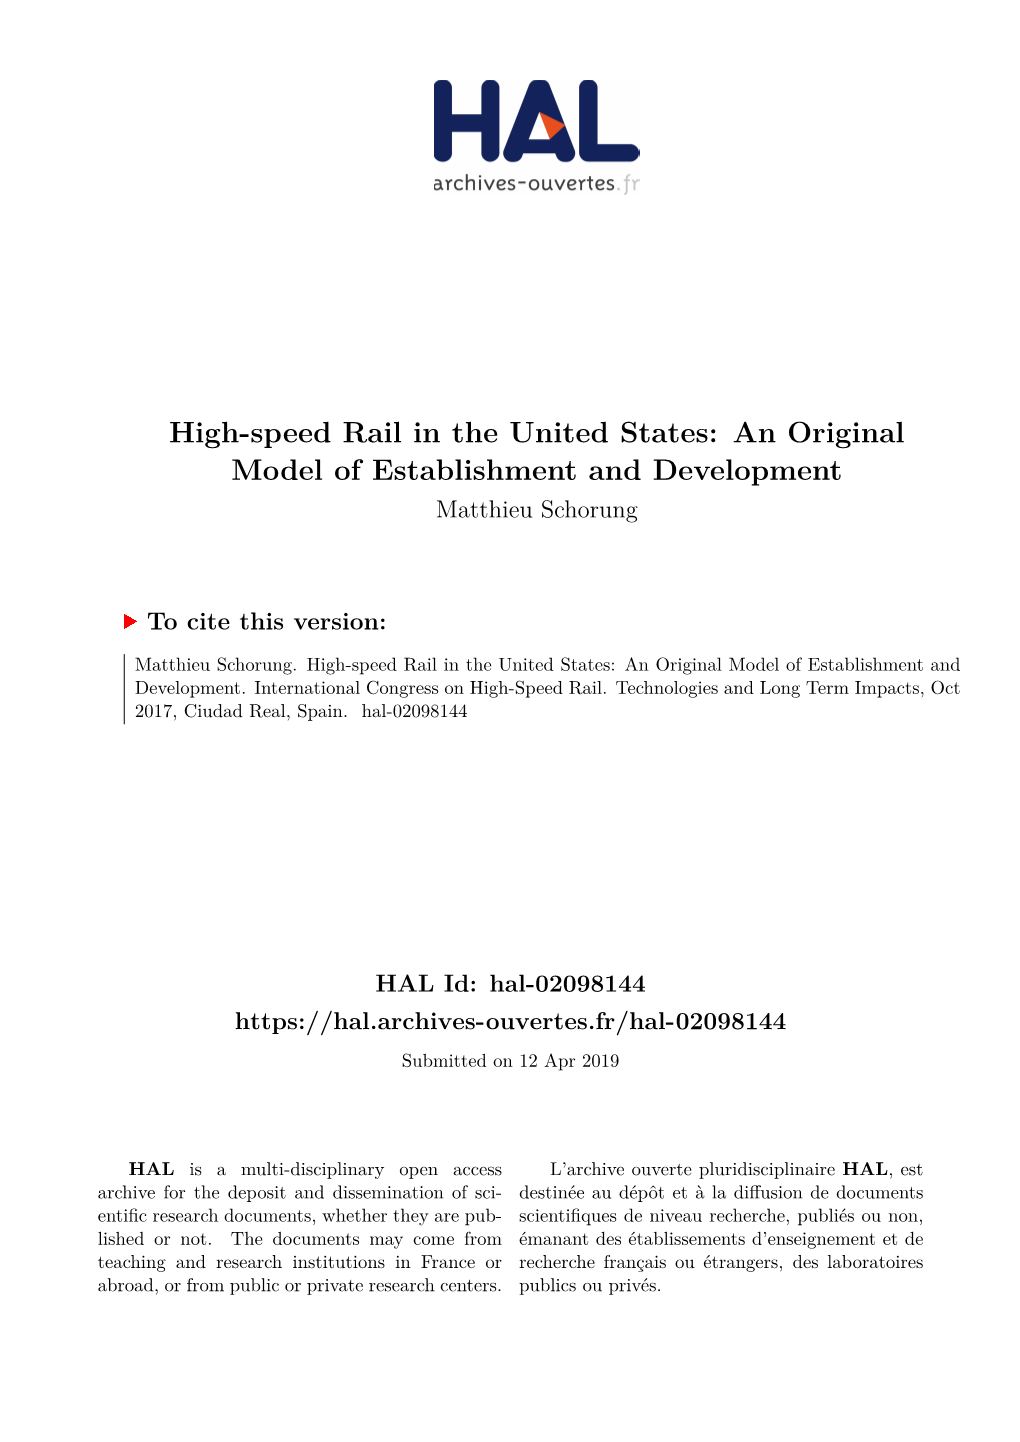 High-Speed Rail in the United States: an Original Model of Establishment and Development Matthieu Schorung